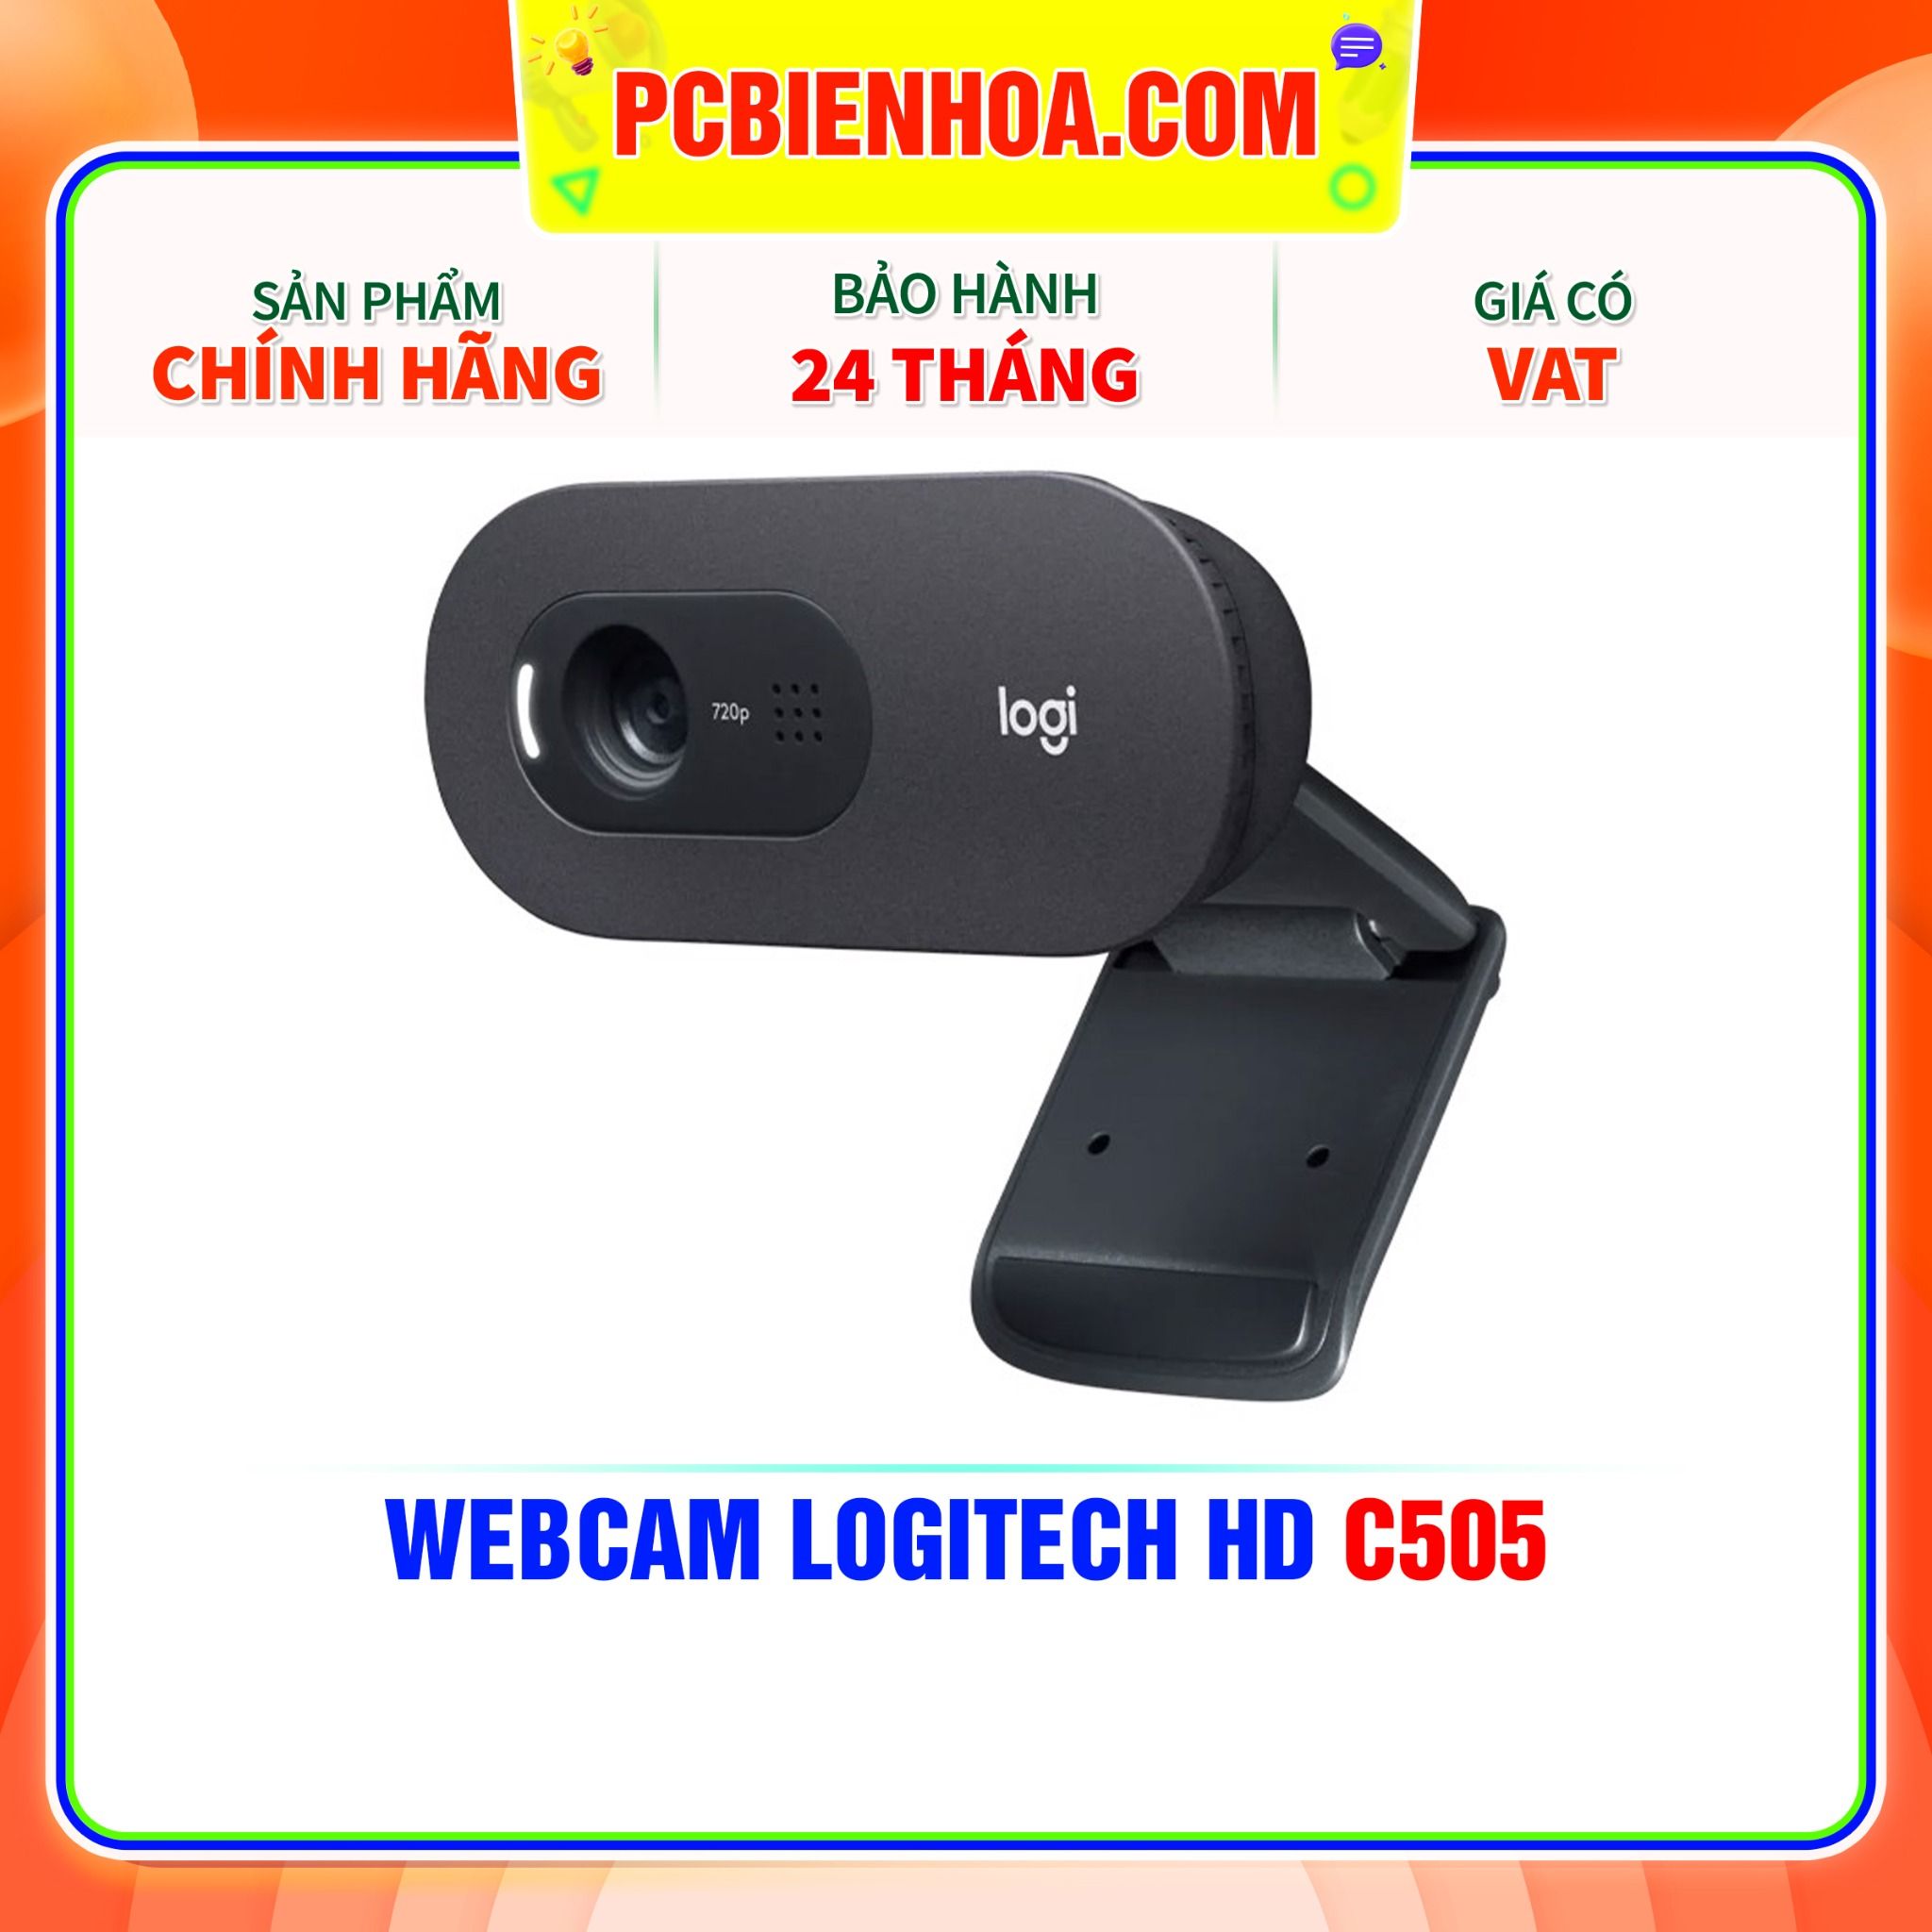  WEBCAM LOGITECH HD C505 